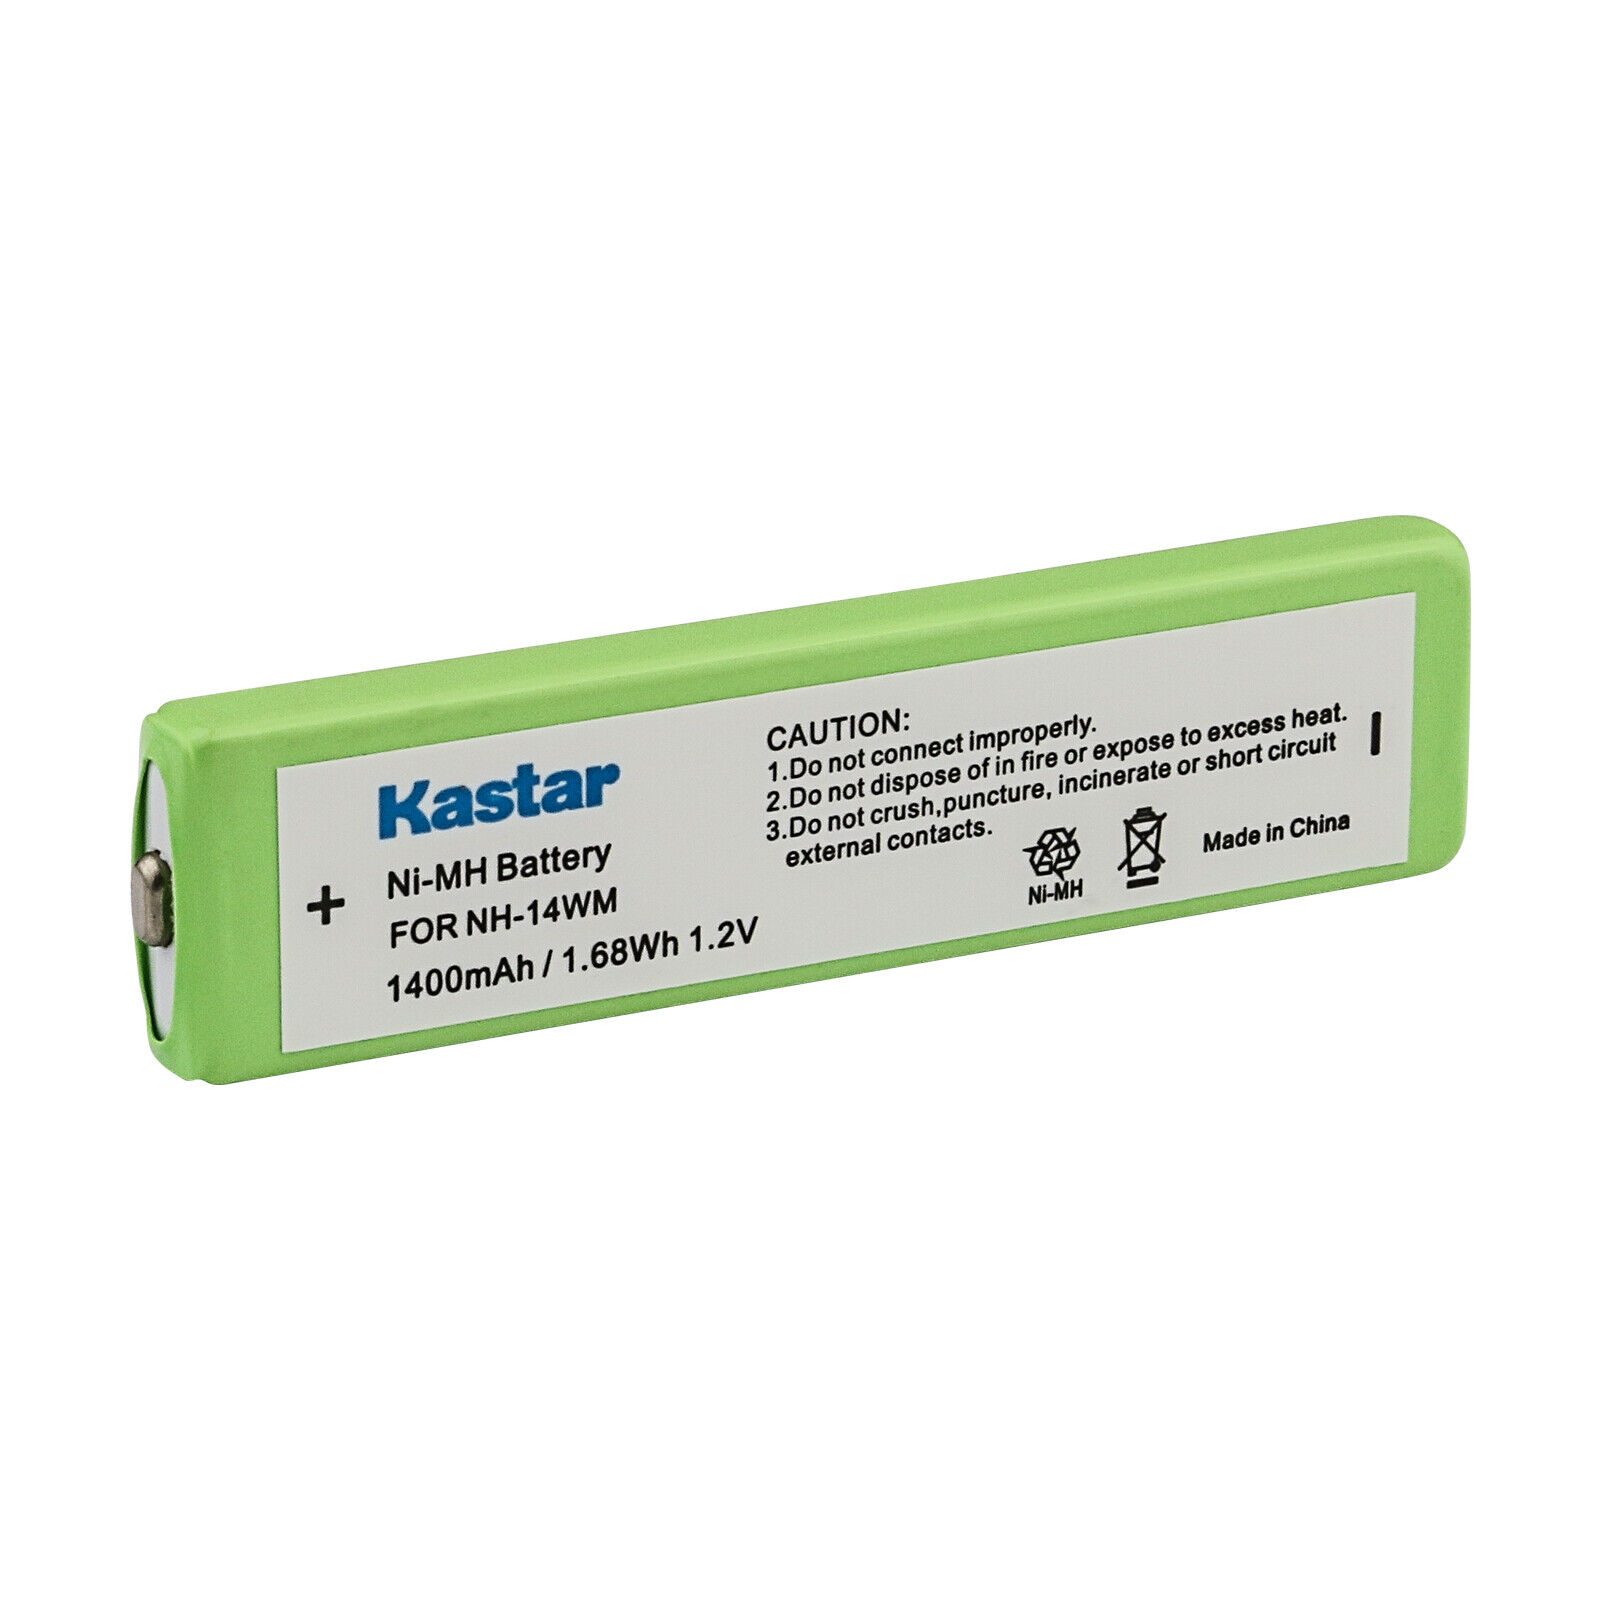 Kastar Gumstick Battery for Sony WM-EX670, WM-EX672, MZ-R55, MZ-R90, MZ-R91